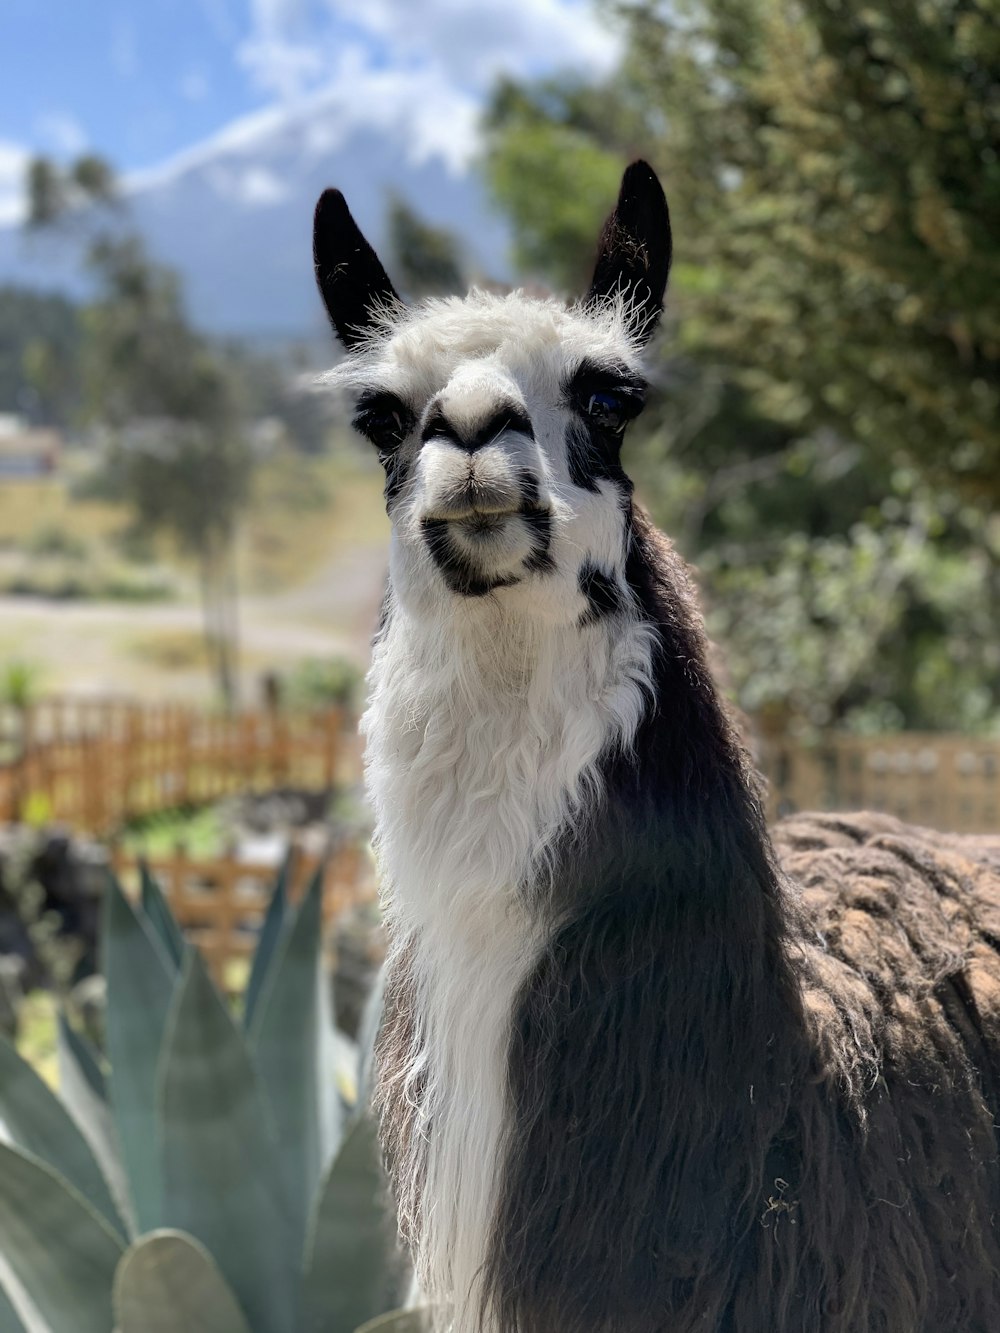 a close up of a llama near a plant